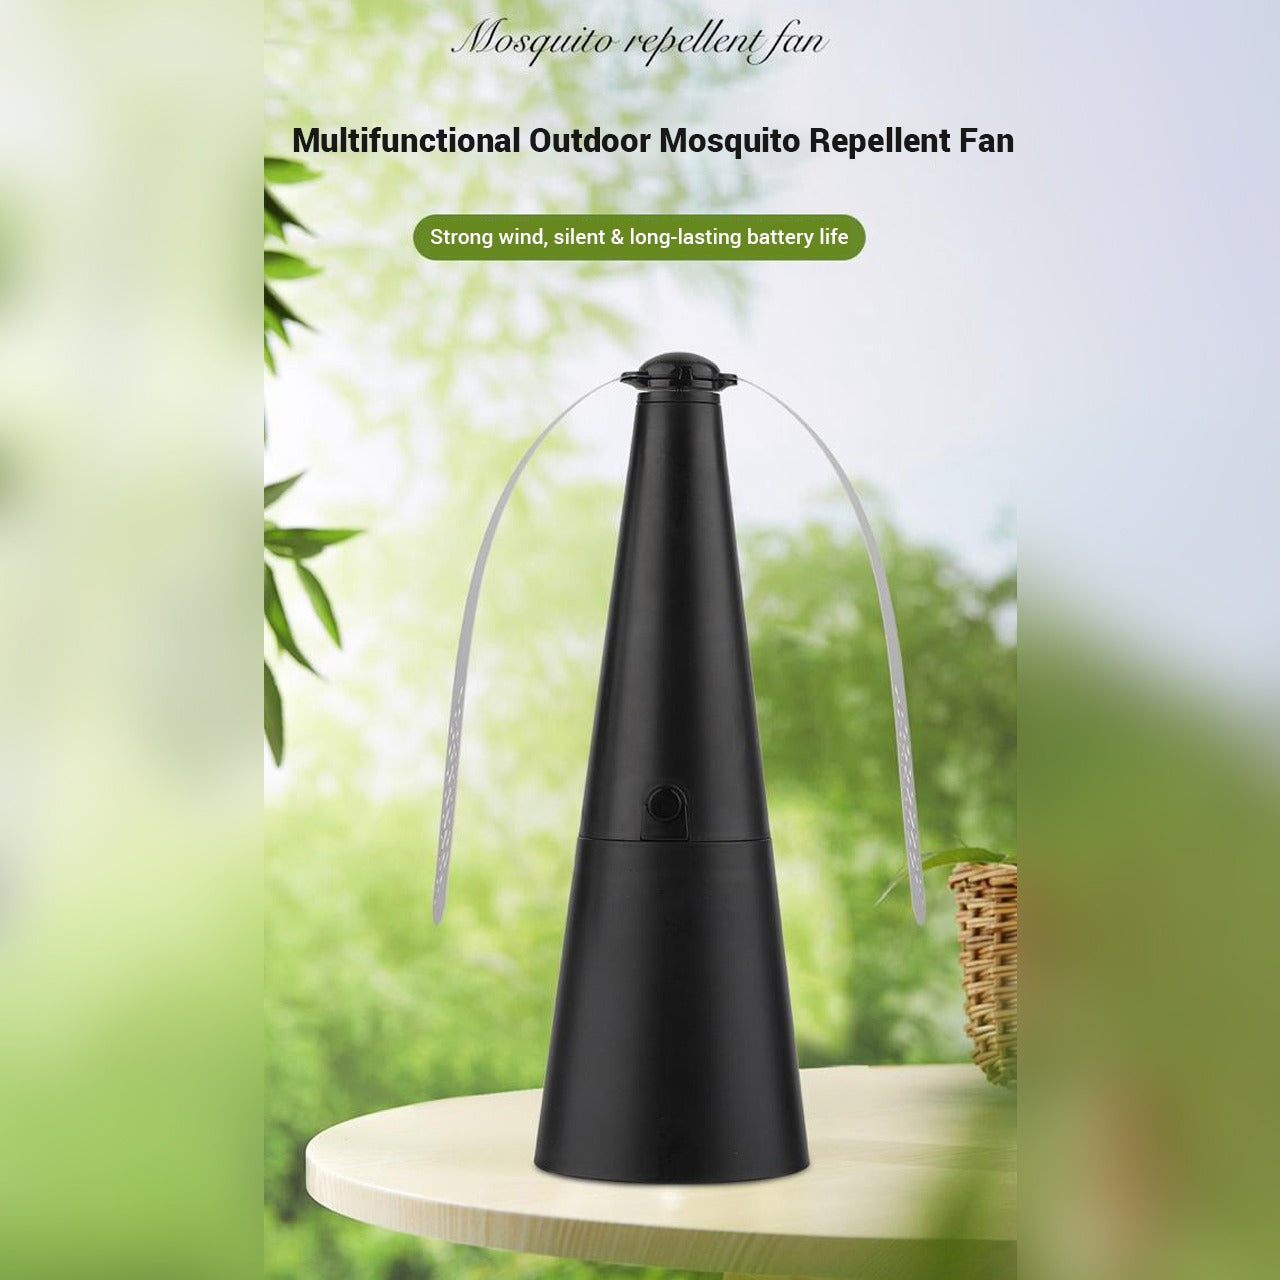 Fan Fly Repellent best as outdoor device